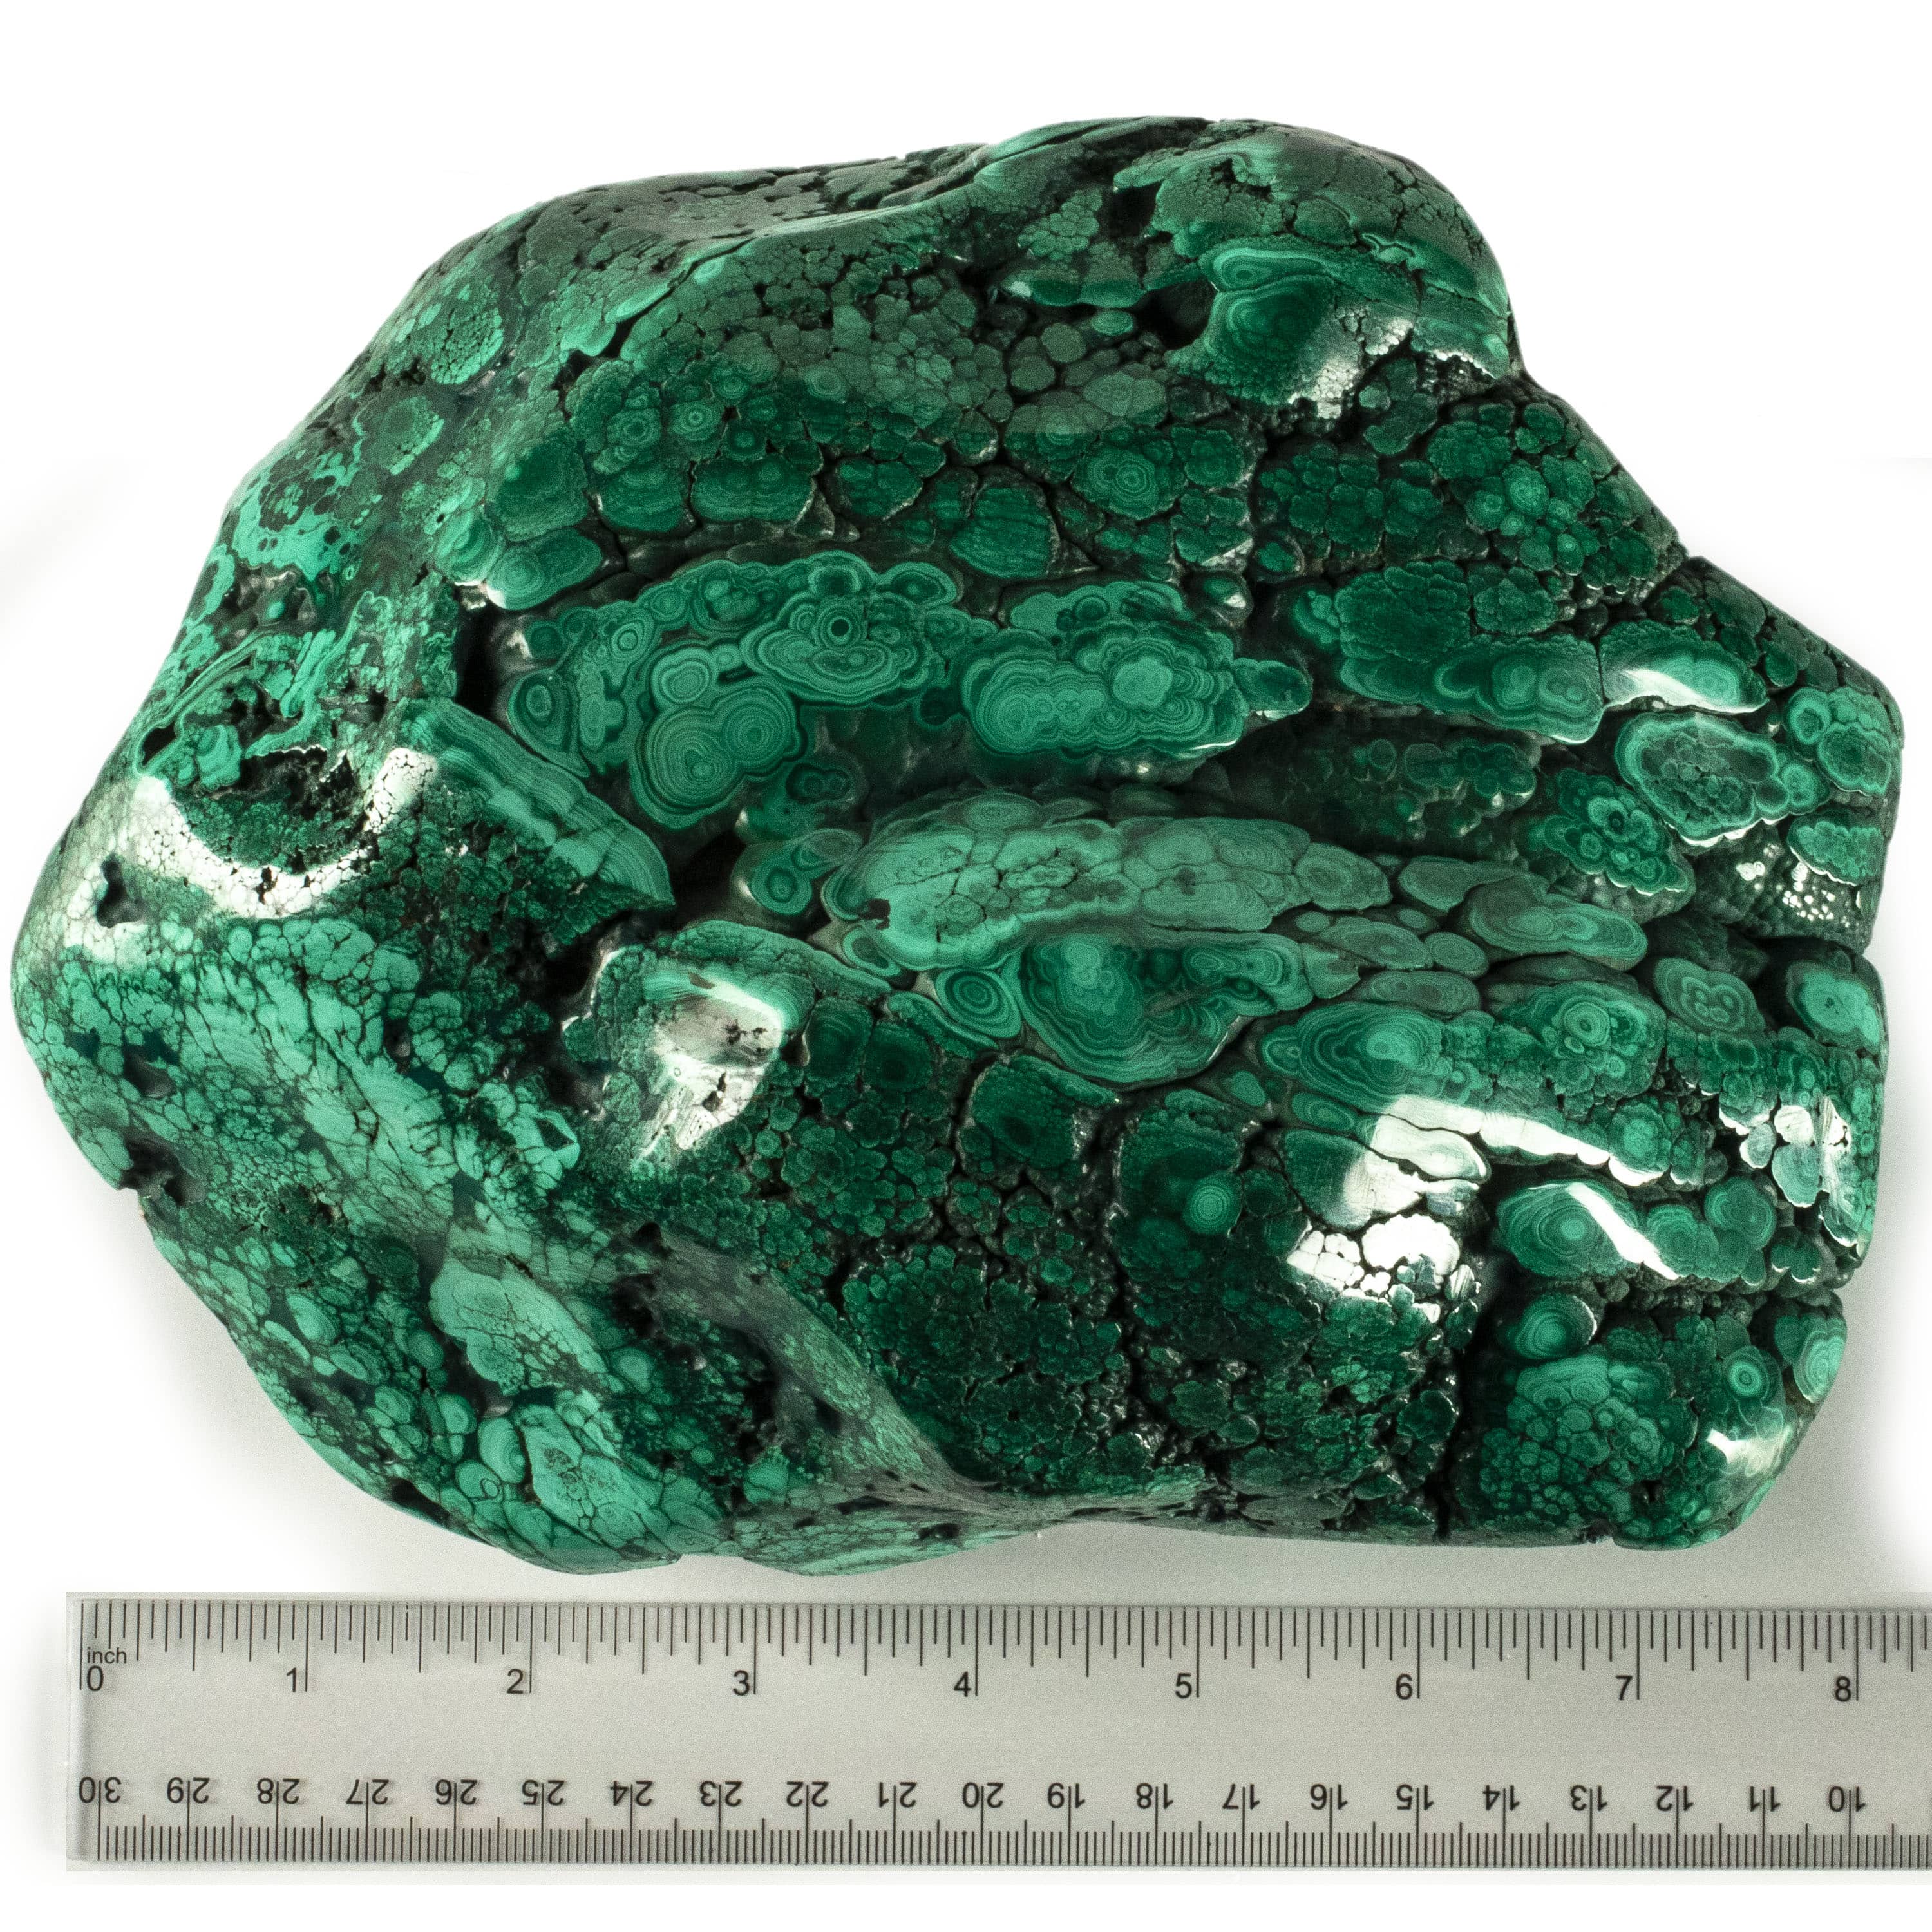 Kalifano Malachite Rare Natural Green Malachite Polished Freeform Specimen from Congo - 4.7 kg / 10.4 lbs MA3300.002